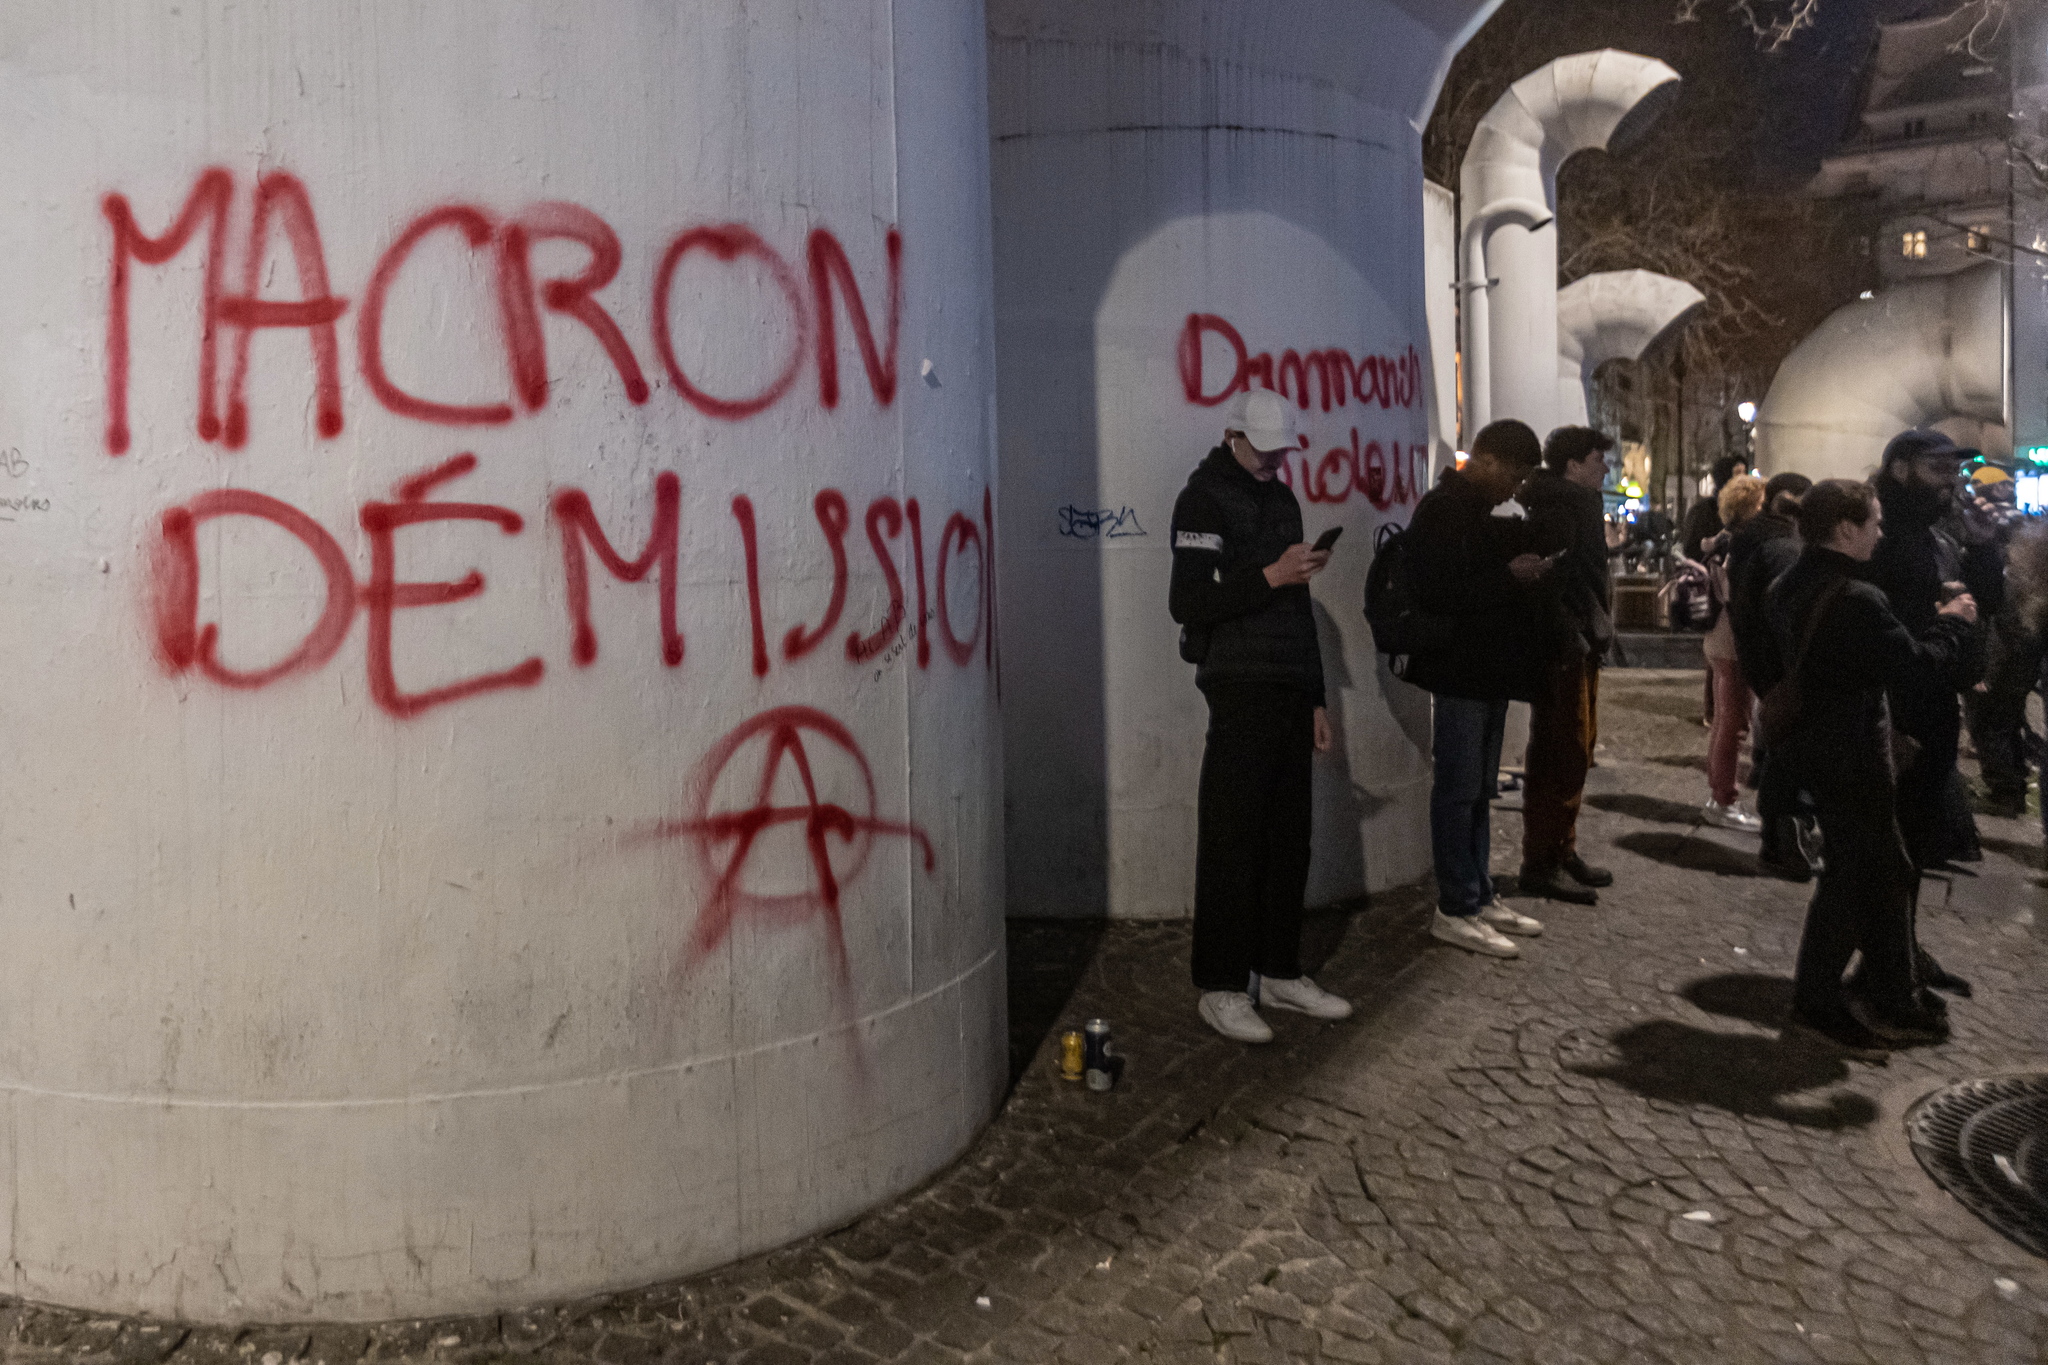 Manifestantes junto a un graffiti que dice "Macron dimisión" en París.